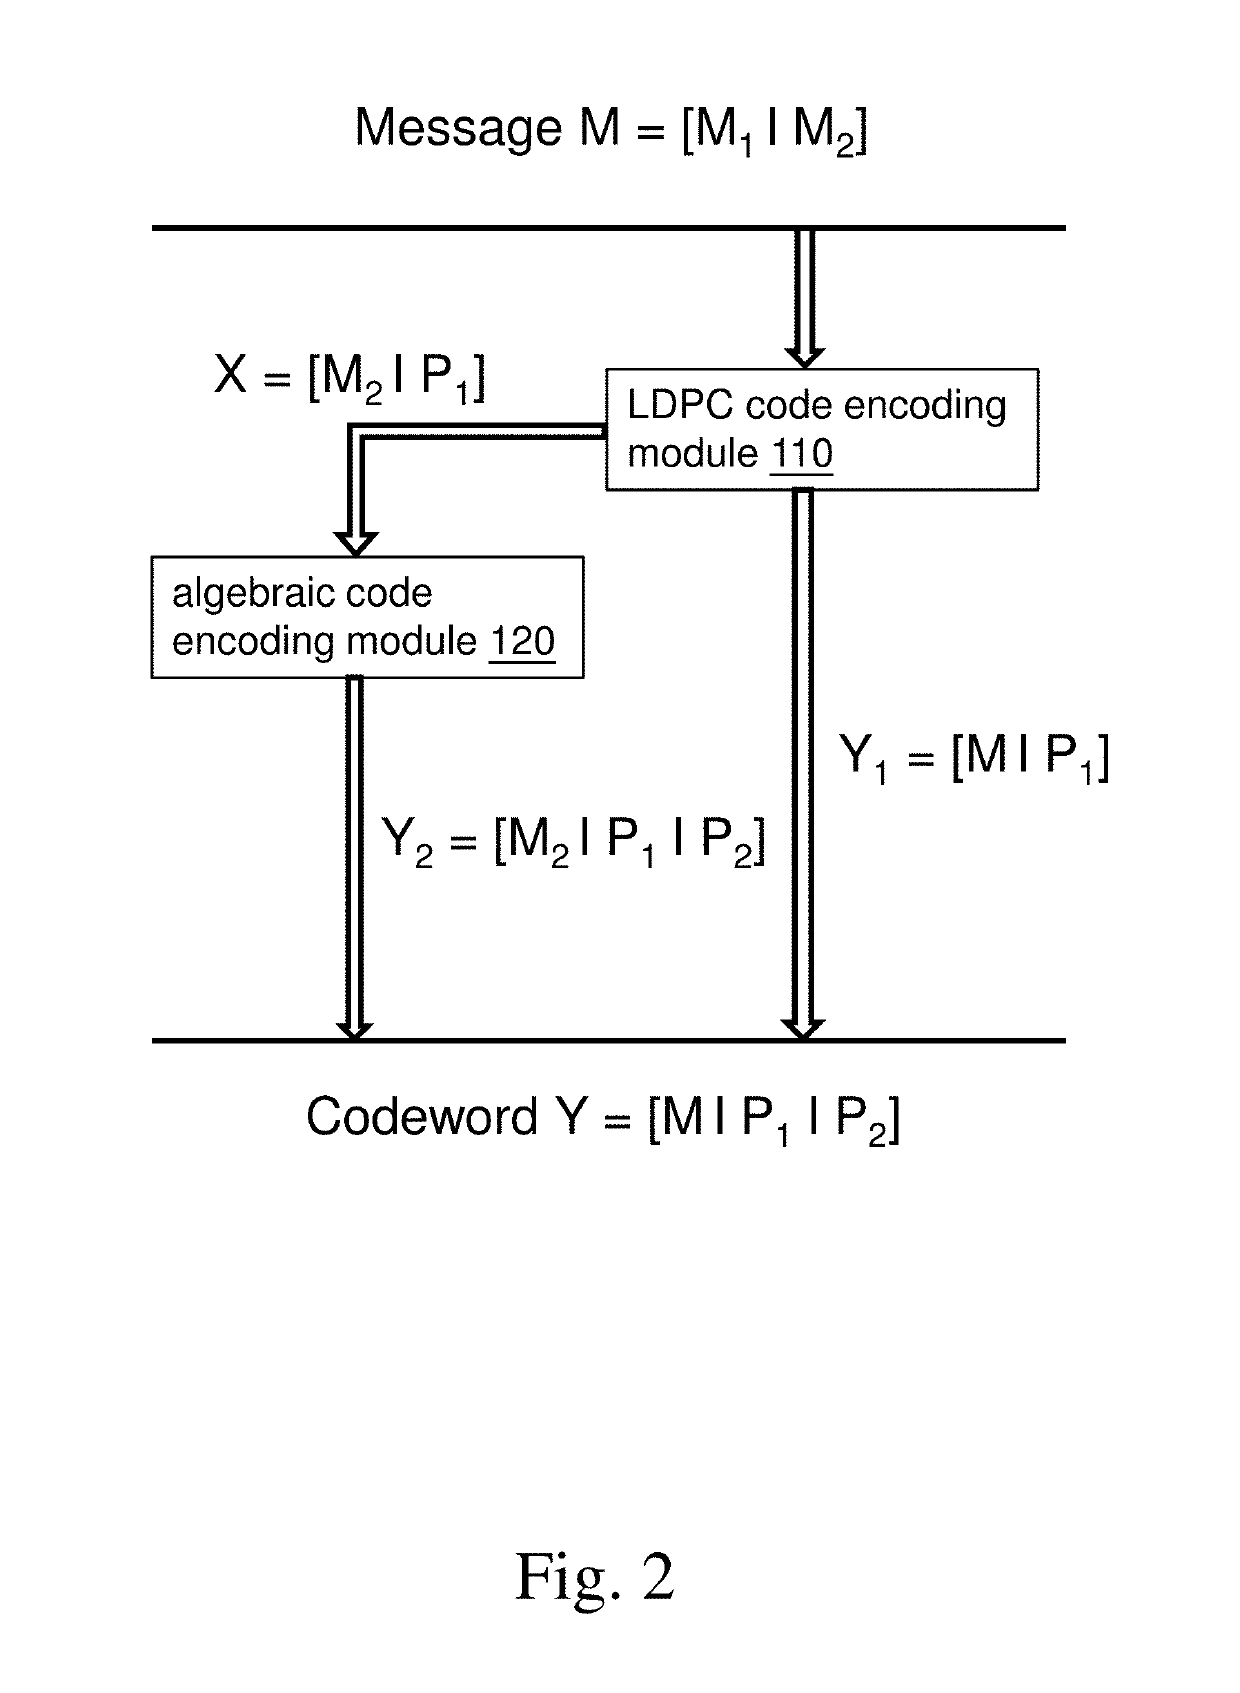 Partial concatenated coding system using algebraic code and LDPC code